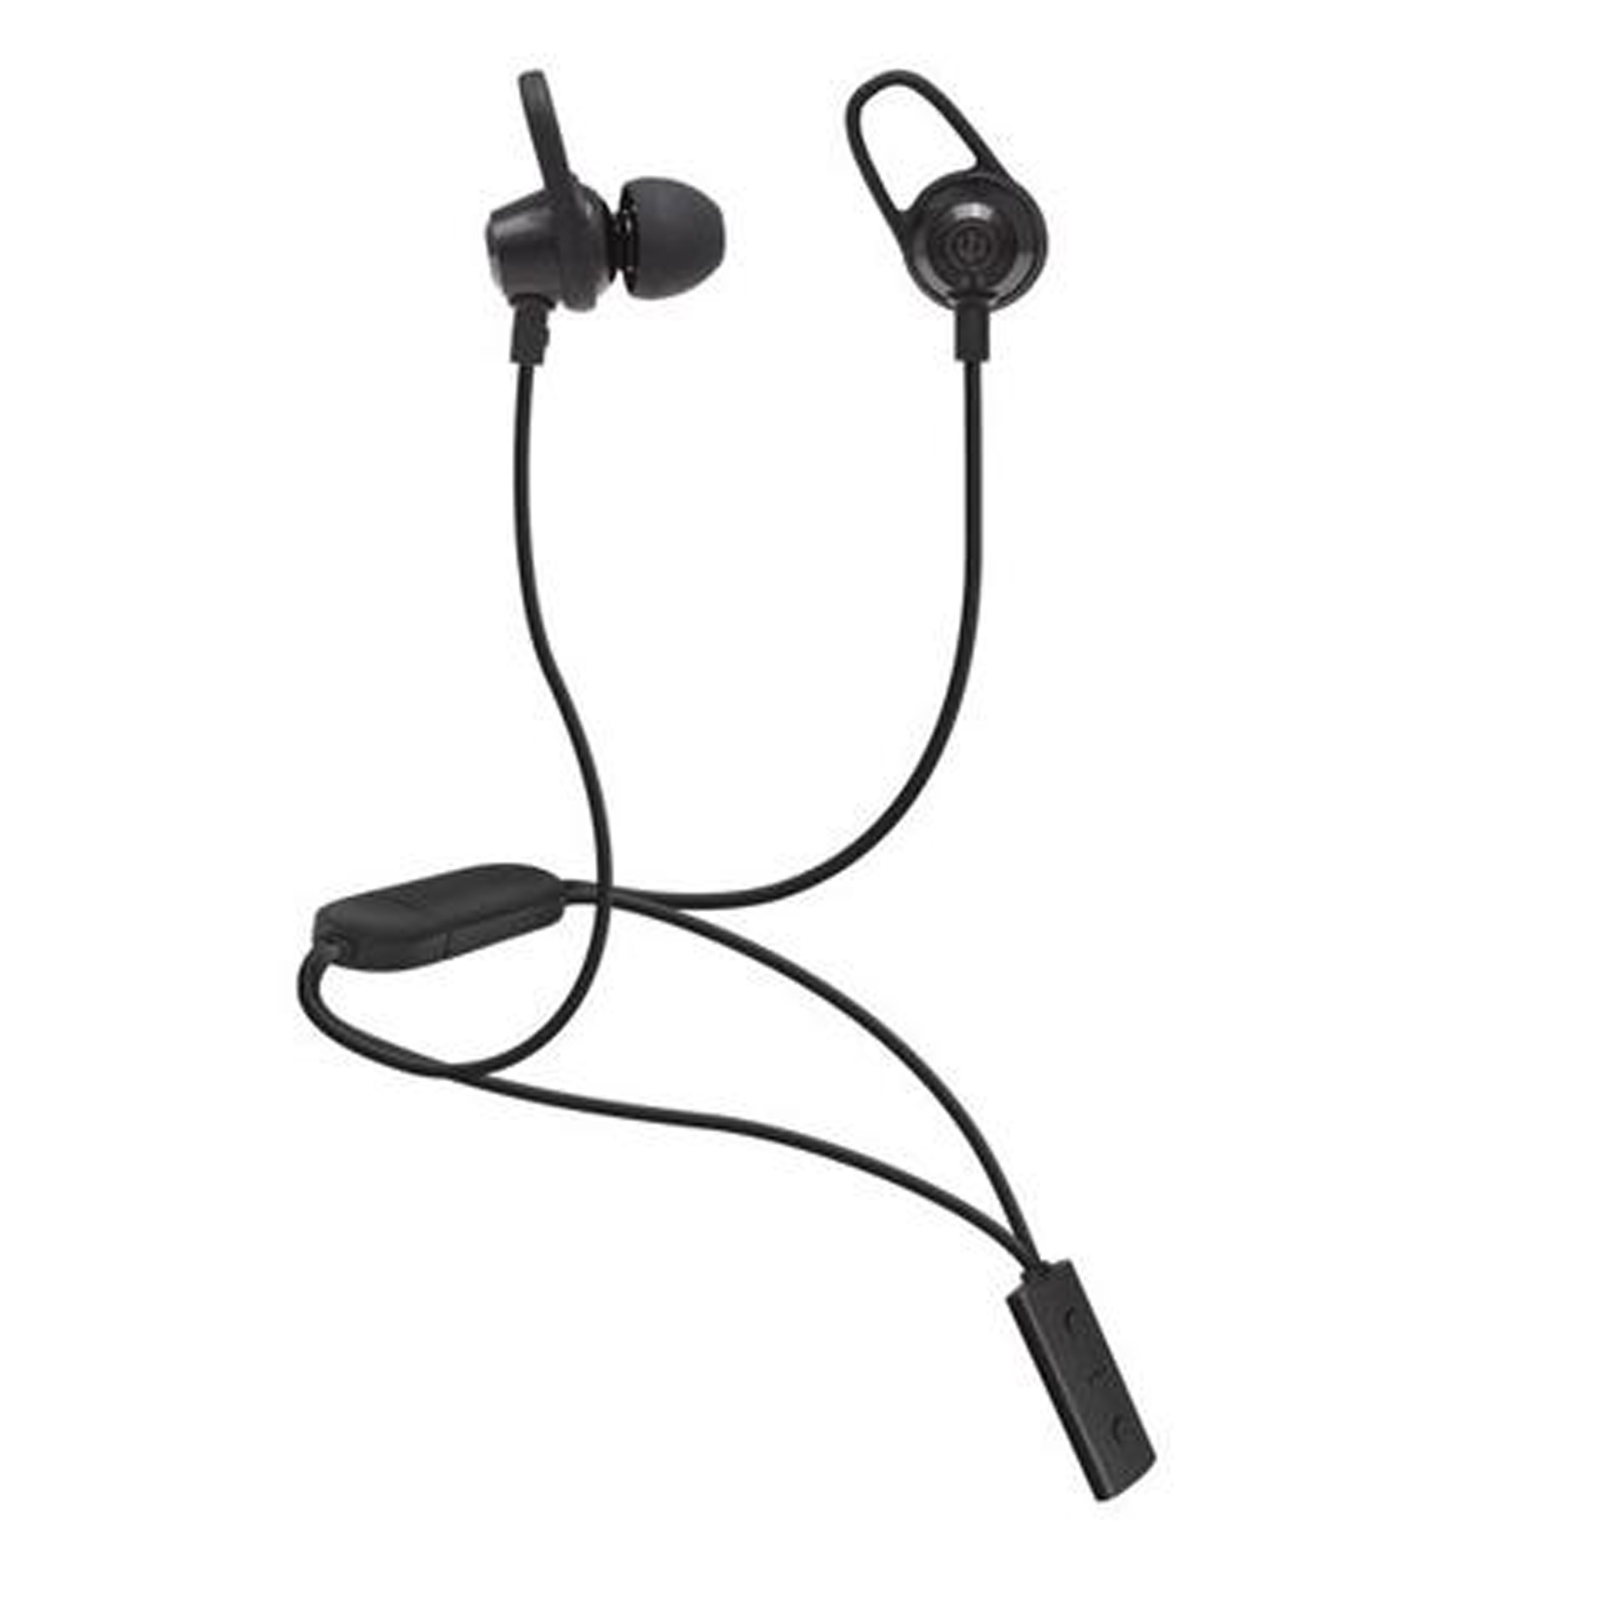 Wicked Audio WI-BT2650 Bandido Bluetooth Wireless Earbuds, Black